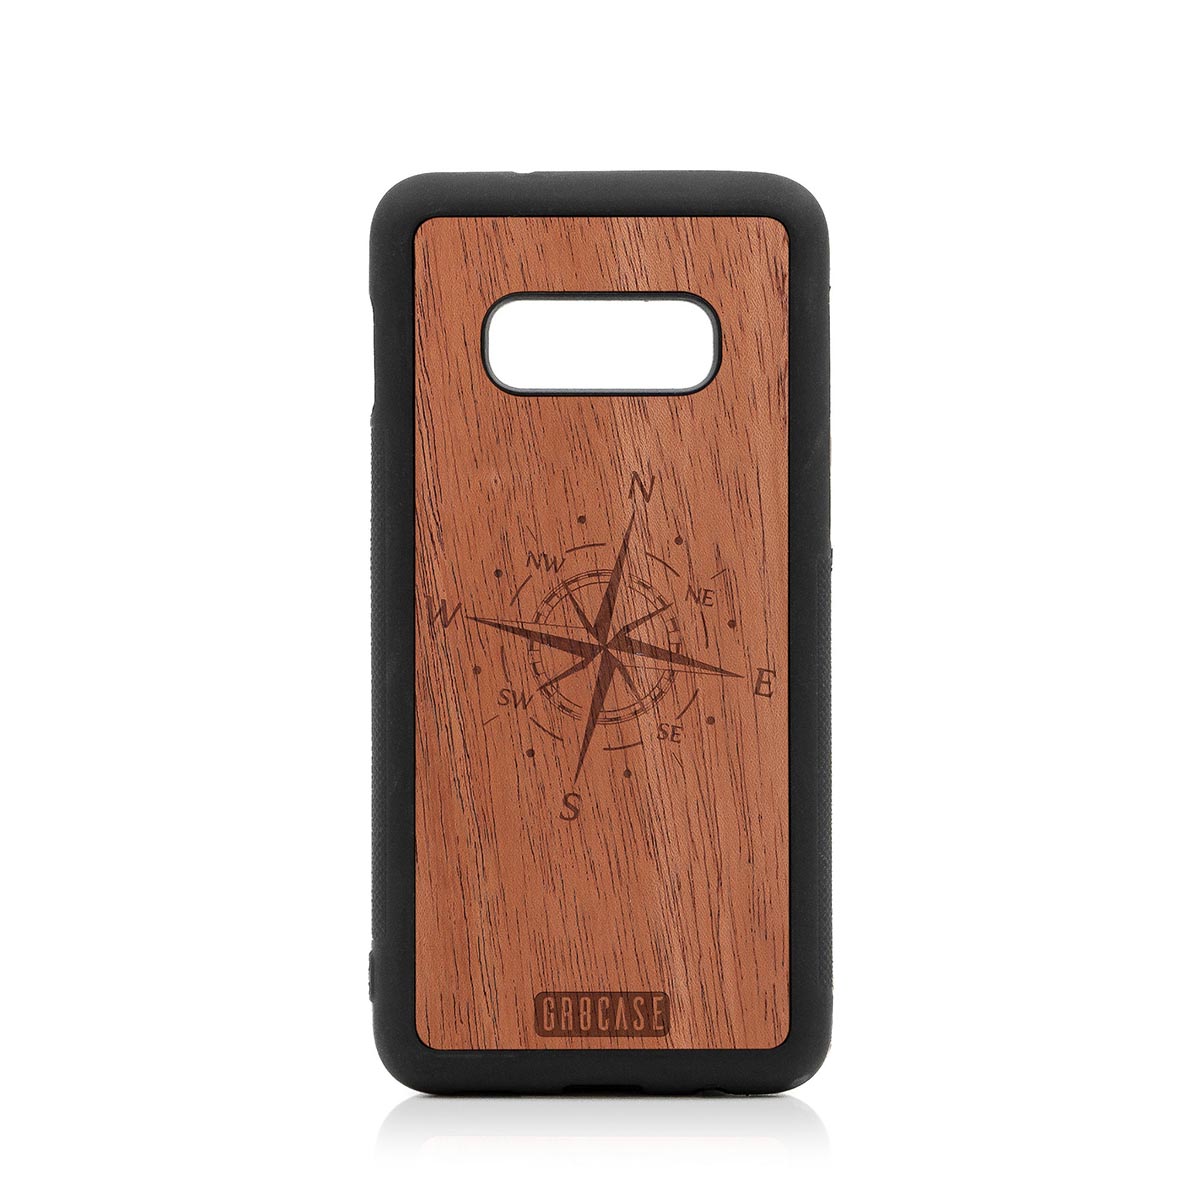 Compass Design Wood Case Samsung Galaxy S10E by GR8CASE